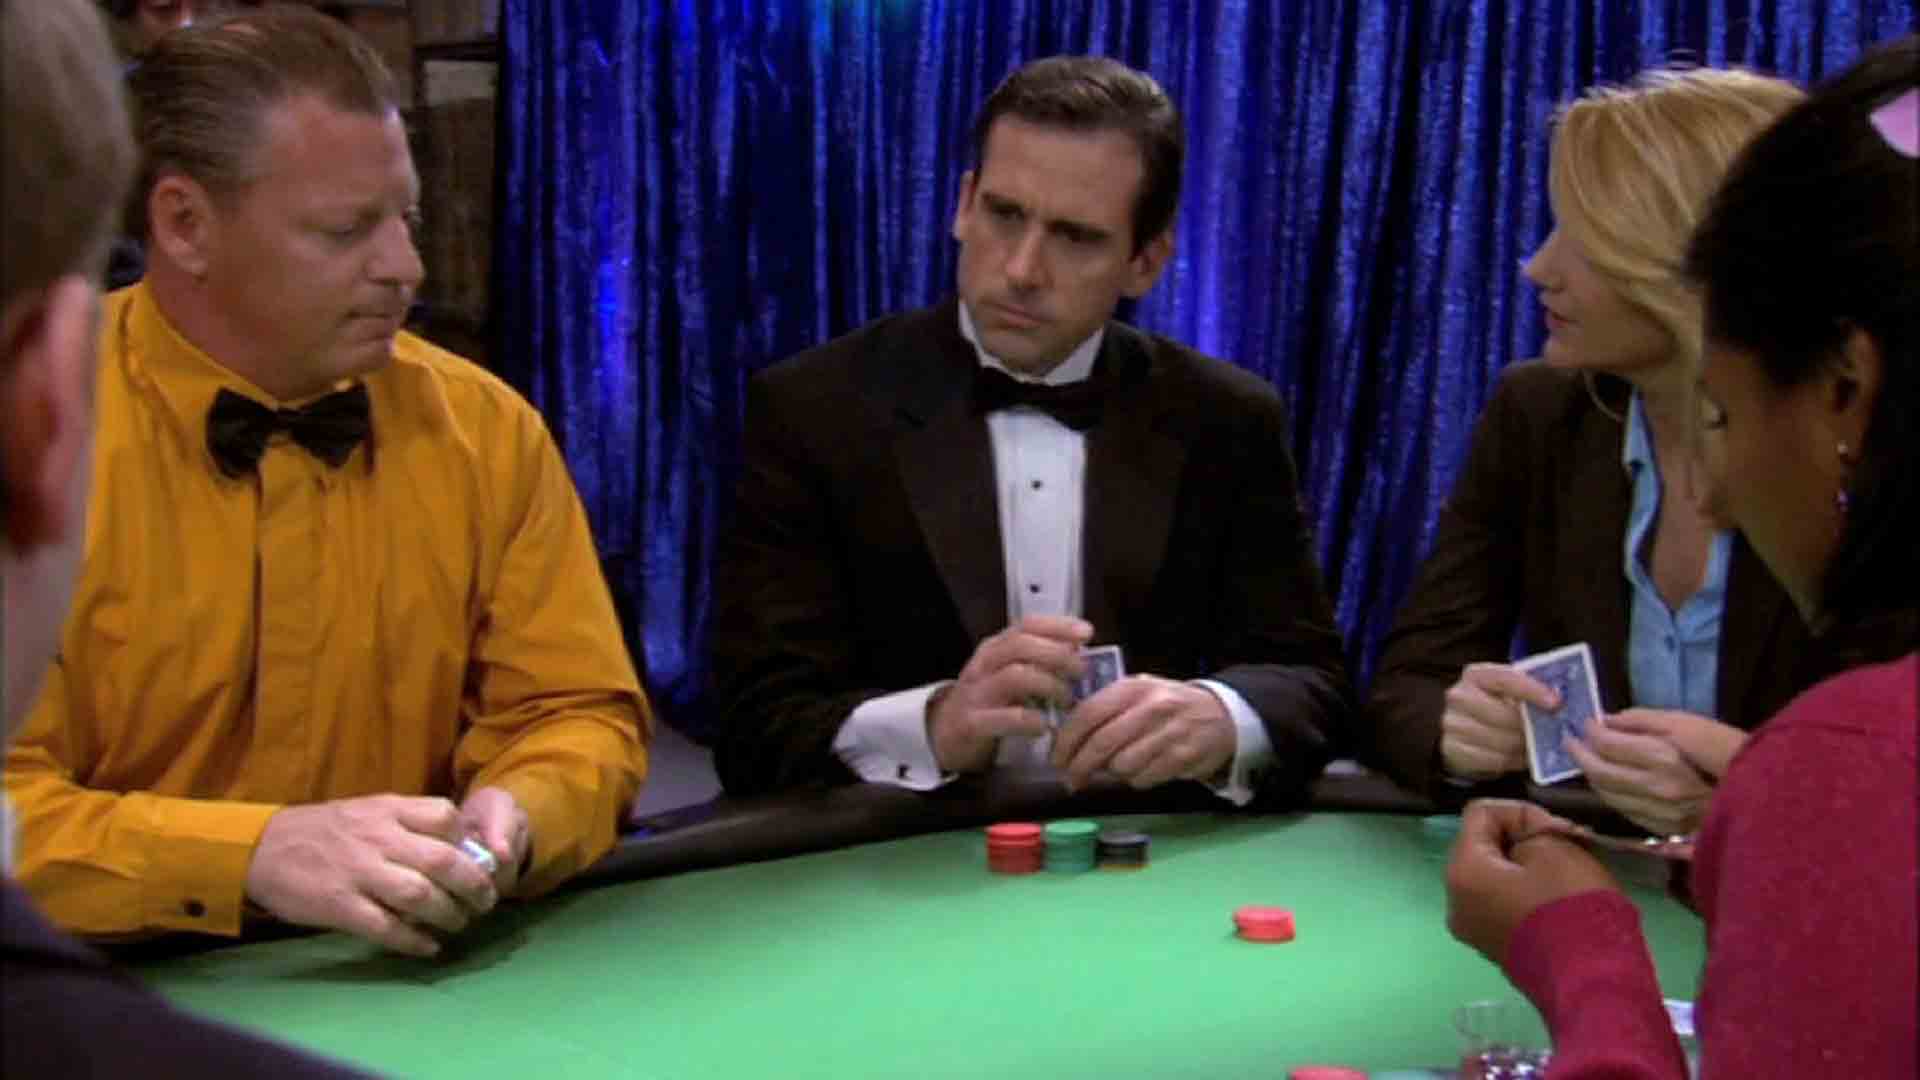 Casino night office episode